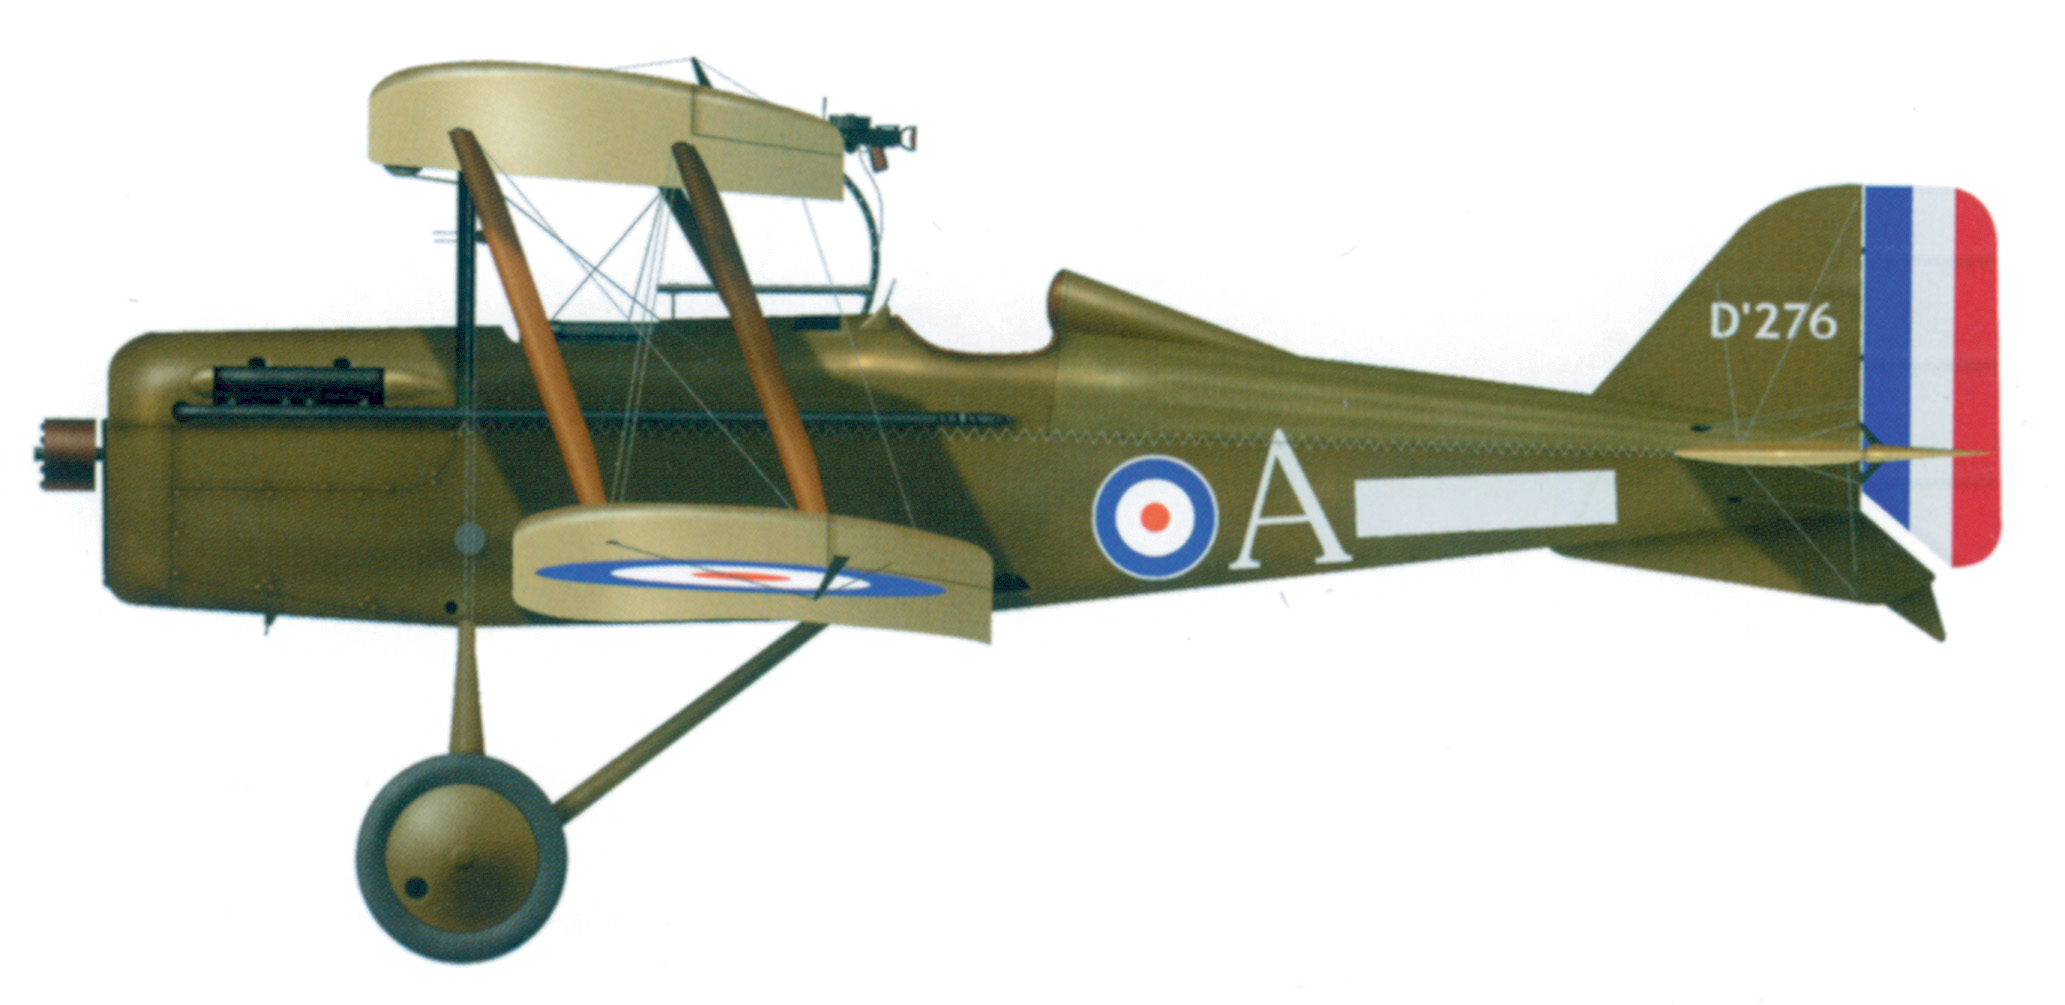 SE5a D276 flown by Captain E “Mick” Mannock of No. 74 Squadron, RAF, Spring 1918.